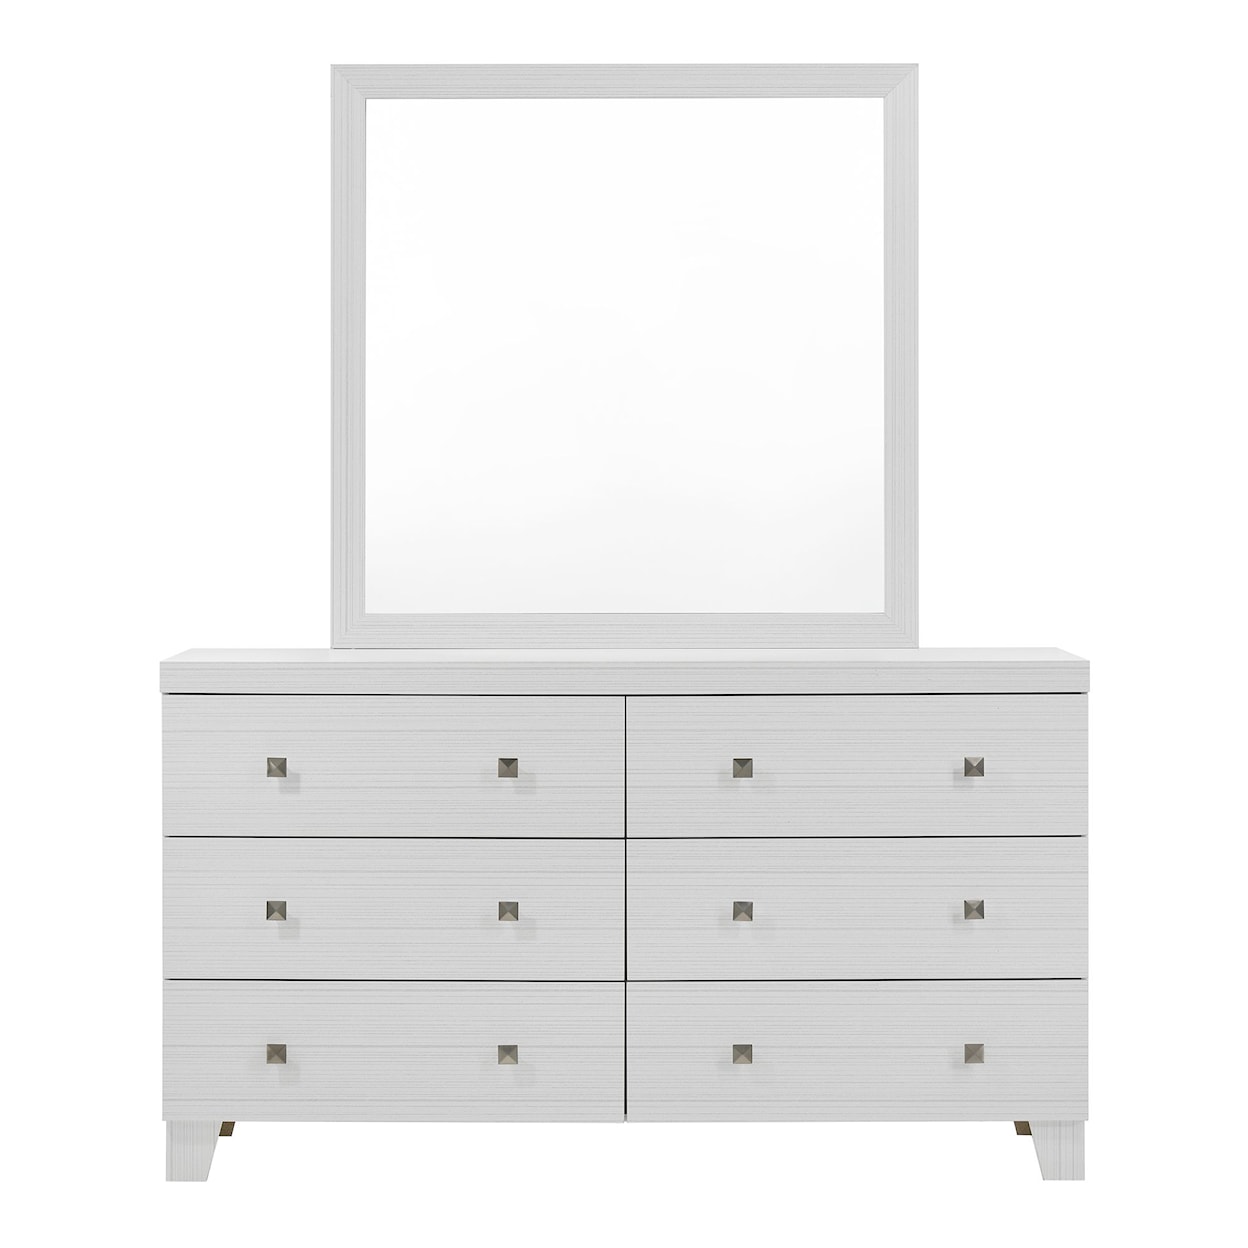 Elements International Belinda Dresser and Mirror Set